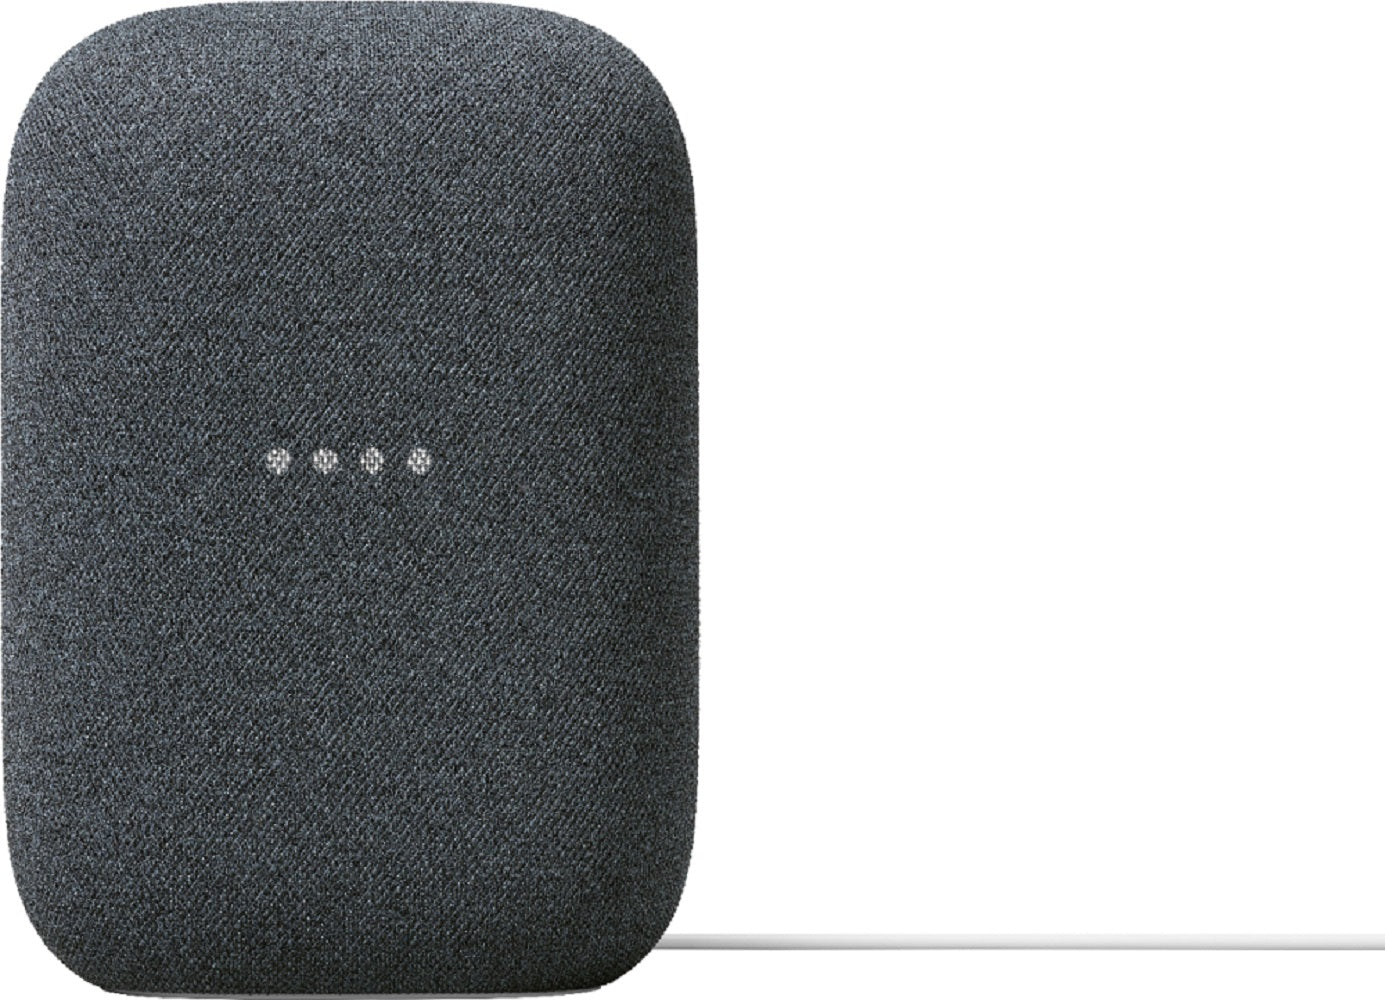 Google Nest Audio Smart Speaker with Google Assistant, GA01586-US - Charcoal (Certified Refurbished)